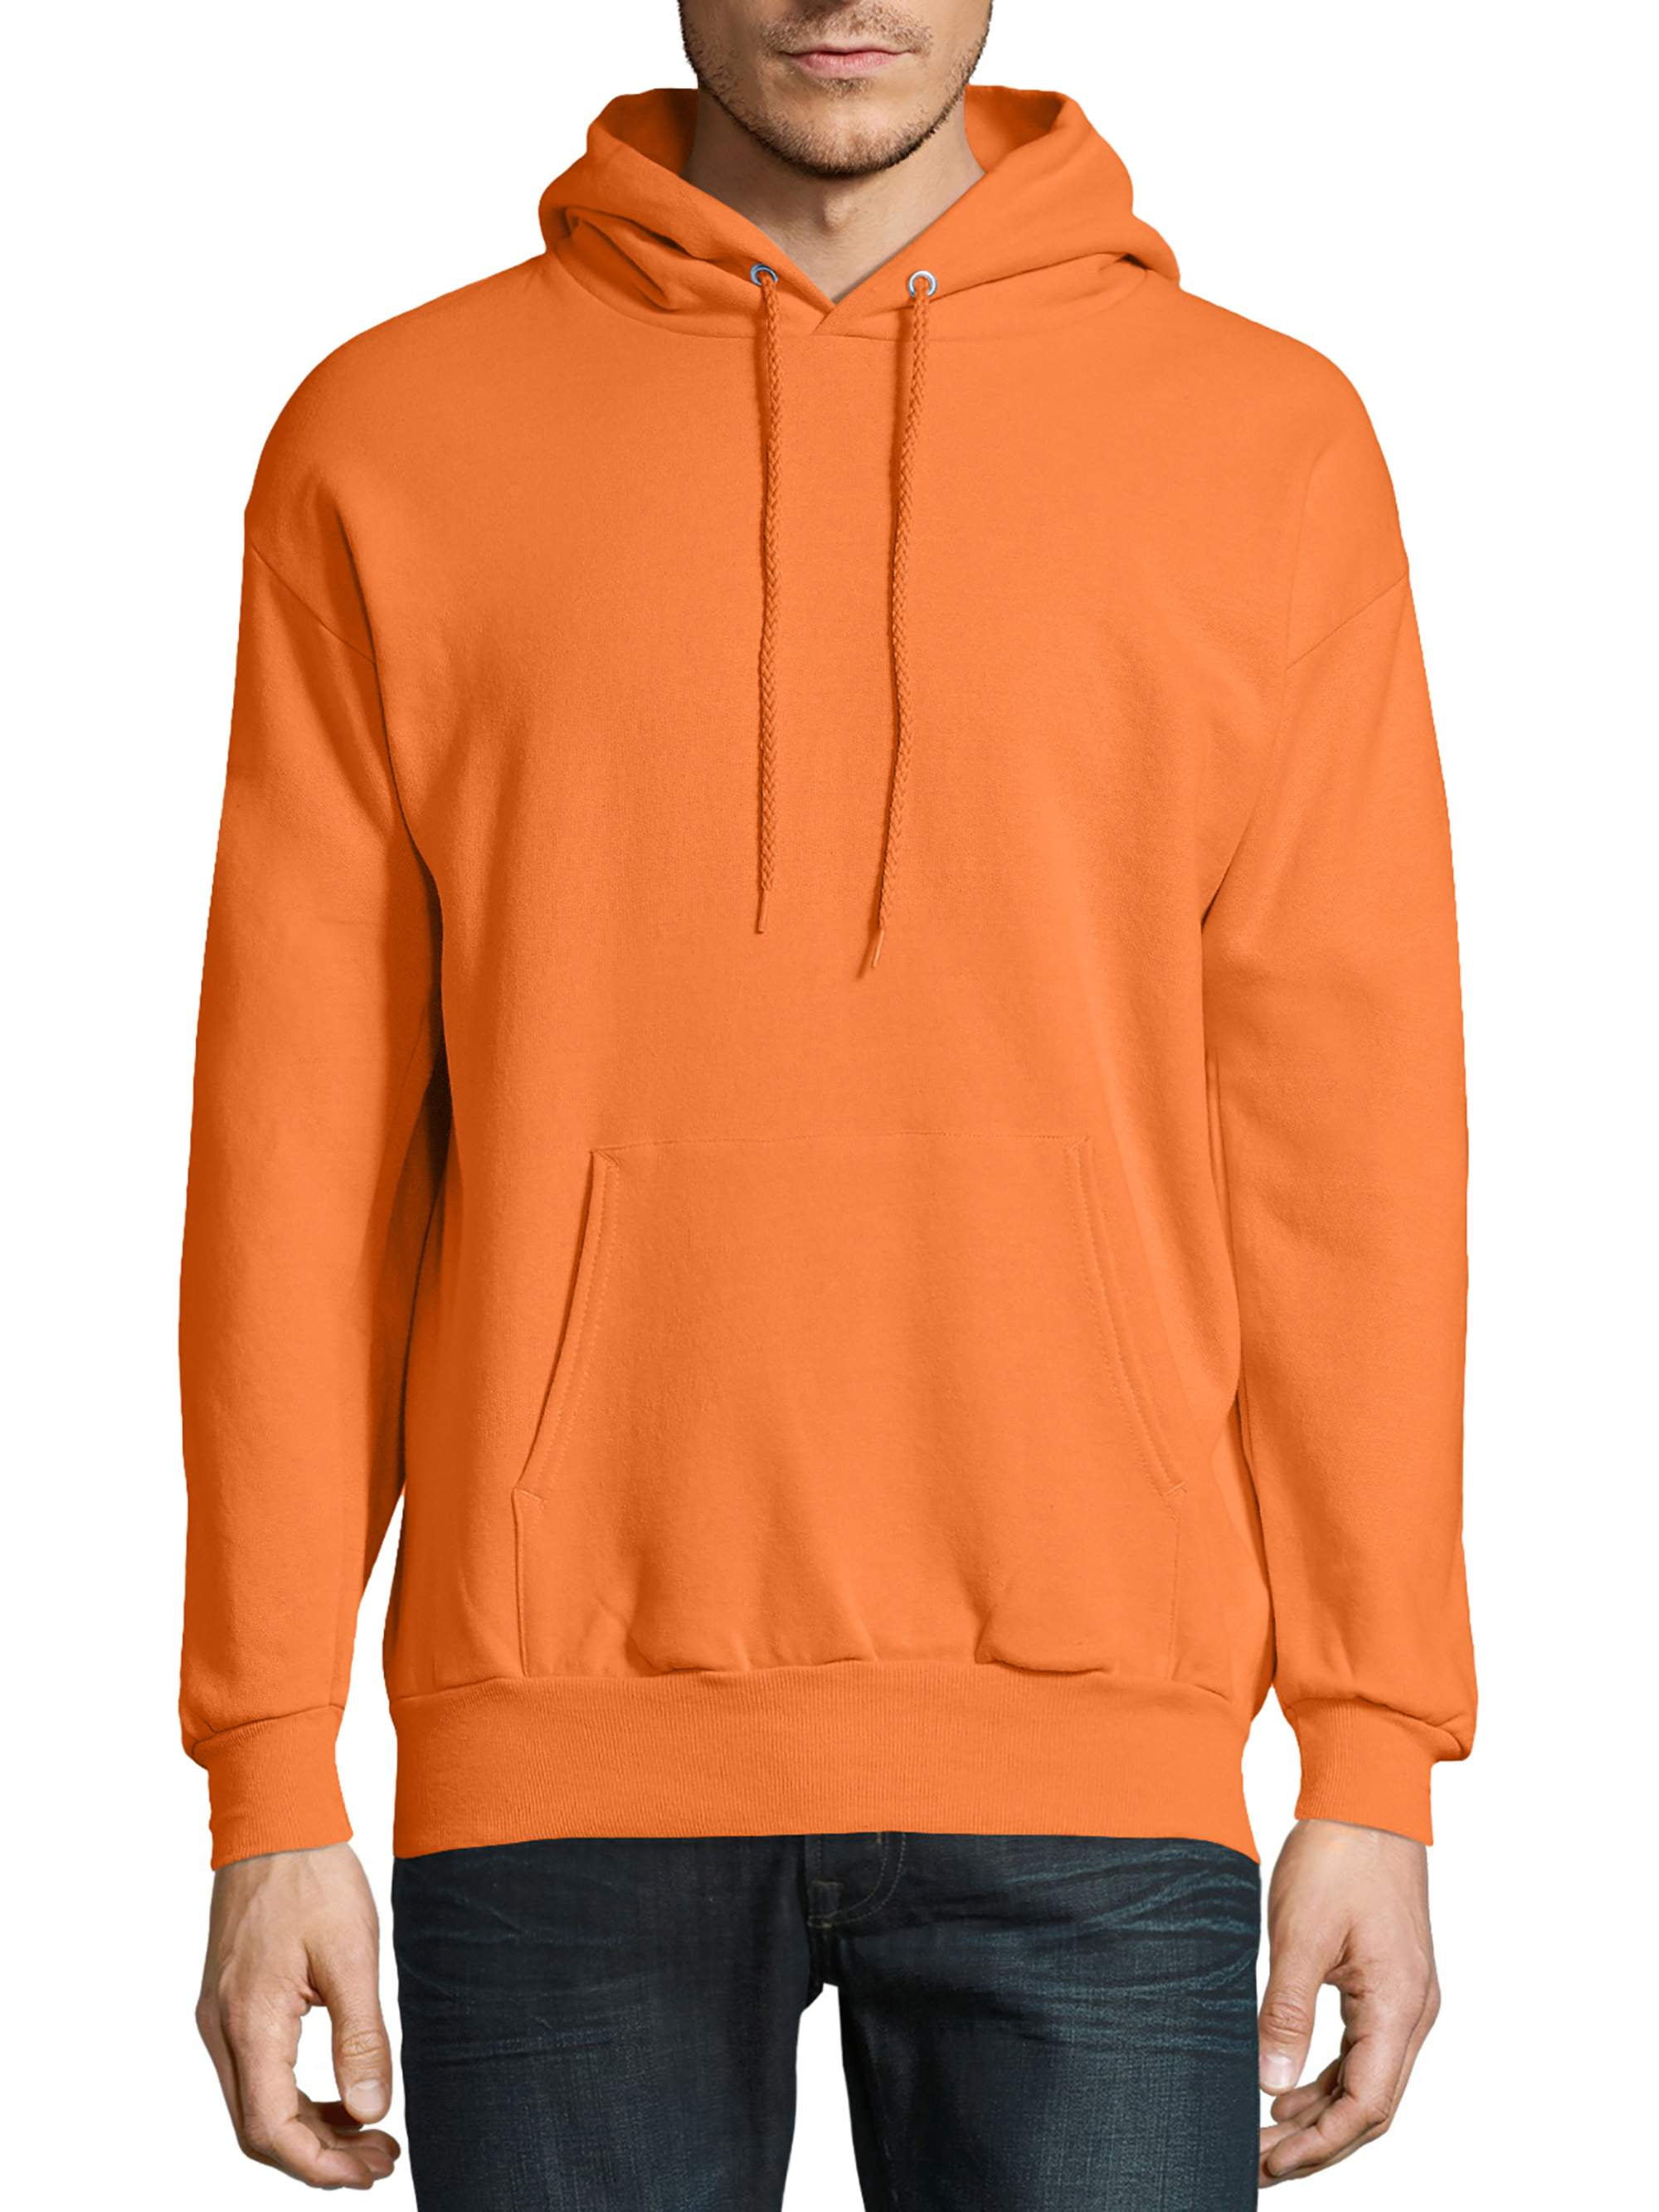 Hanes ComfortBlend▒ EcoSmart▒ Men`s Pullover Hoodie Sweatshirt Safety Orange 2XL